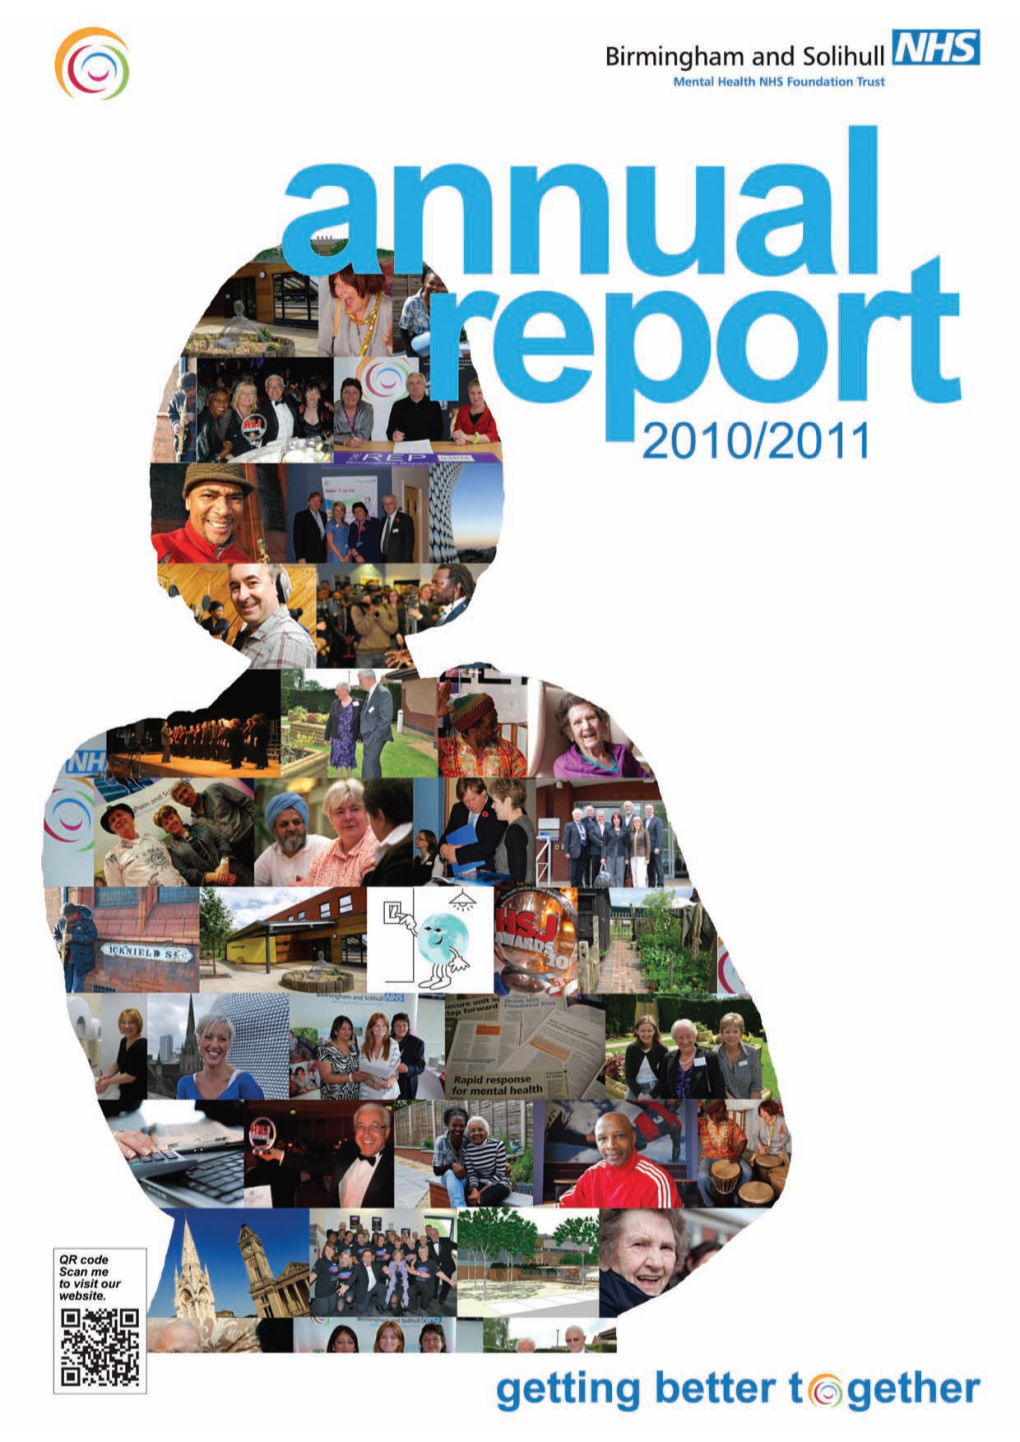 BSMHT Annual Report 2010/11